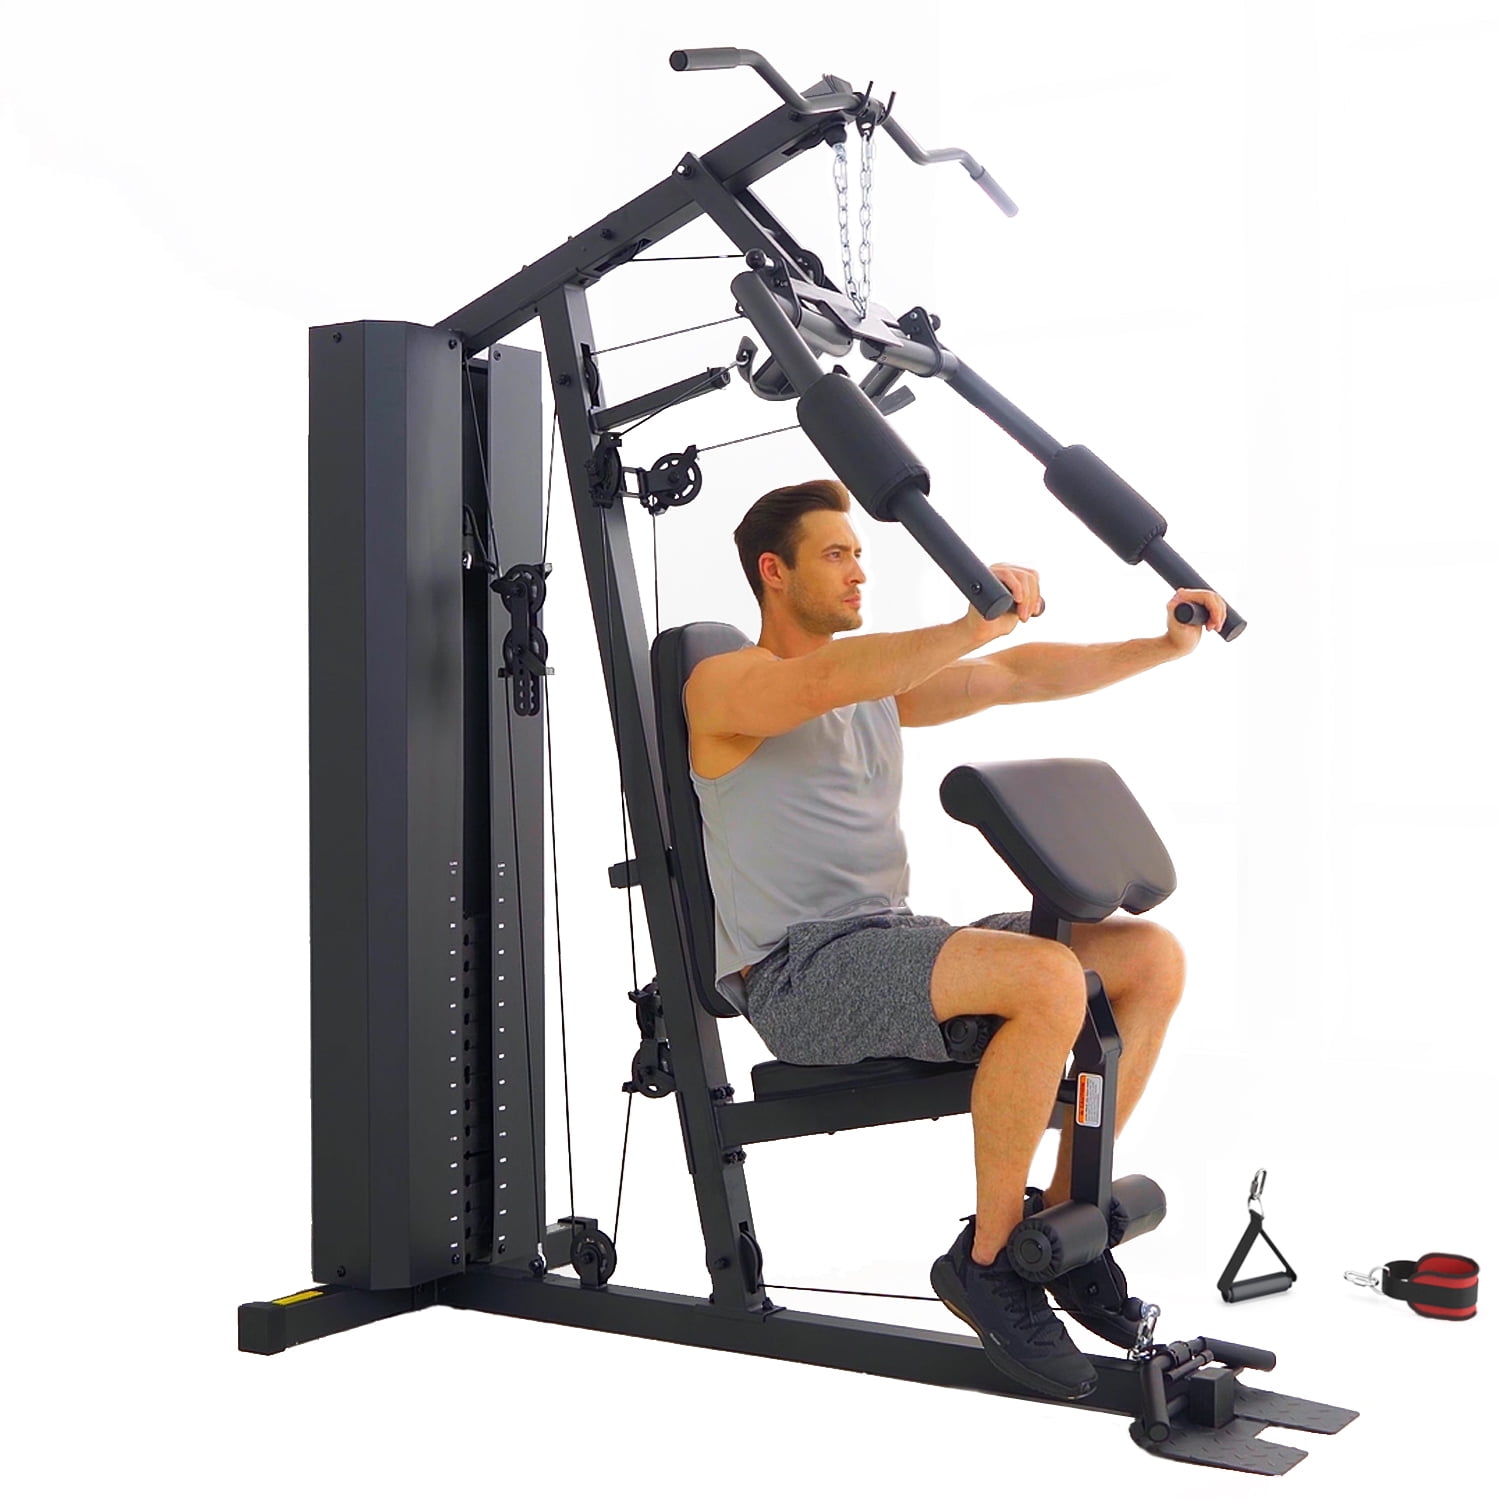 JX Fitness Home Gym Multifunctional Full Body Home Gym Equipment Wlscm-1148l, Black